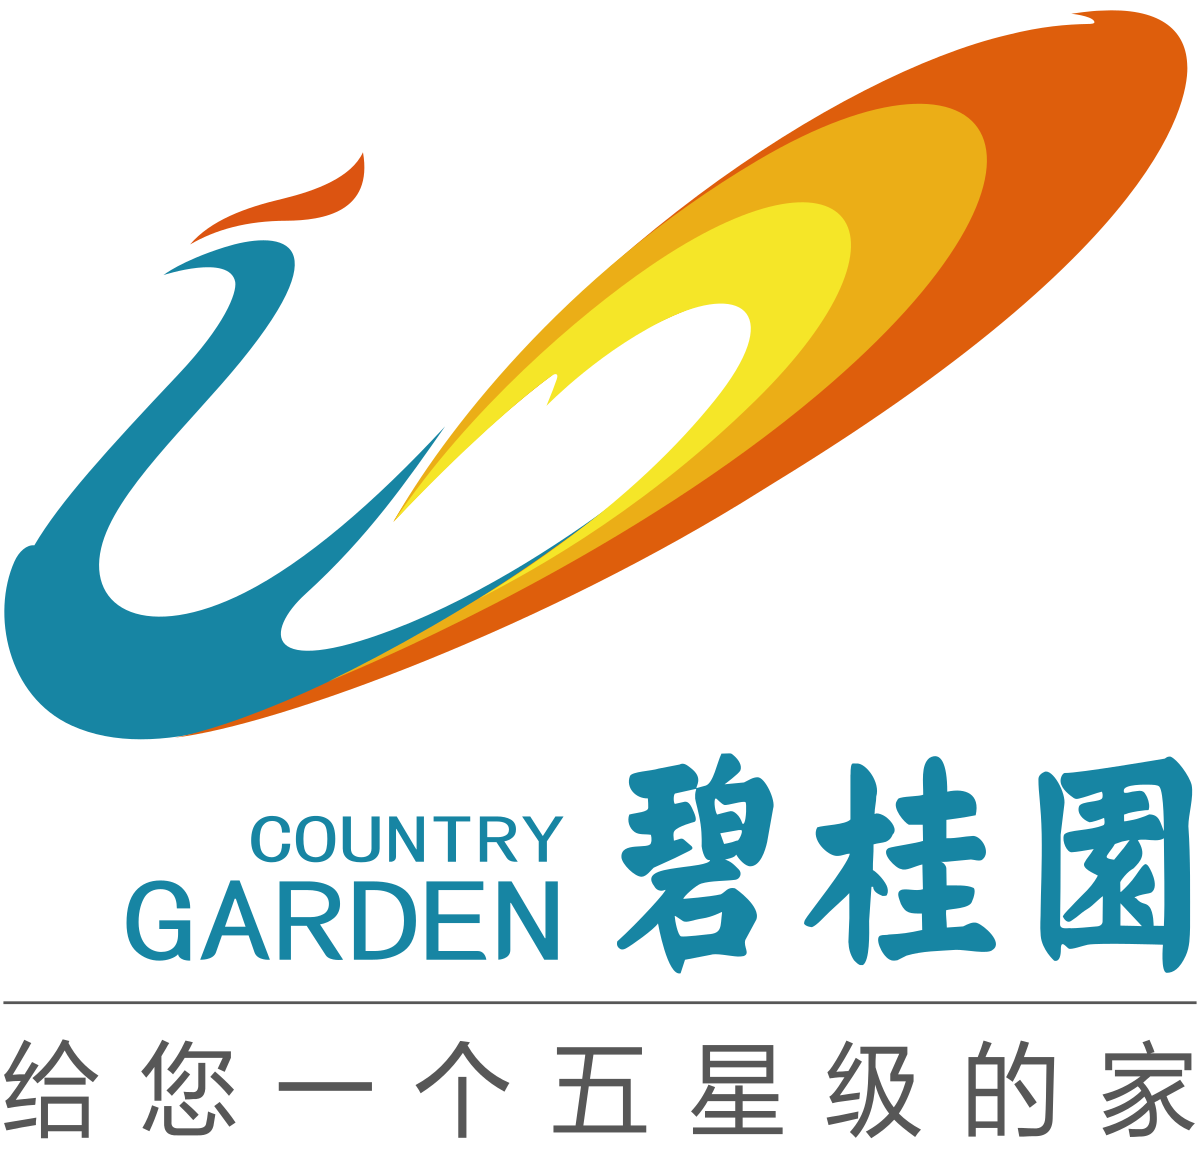 Country Garden Wikipedia